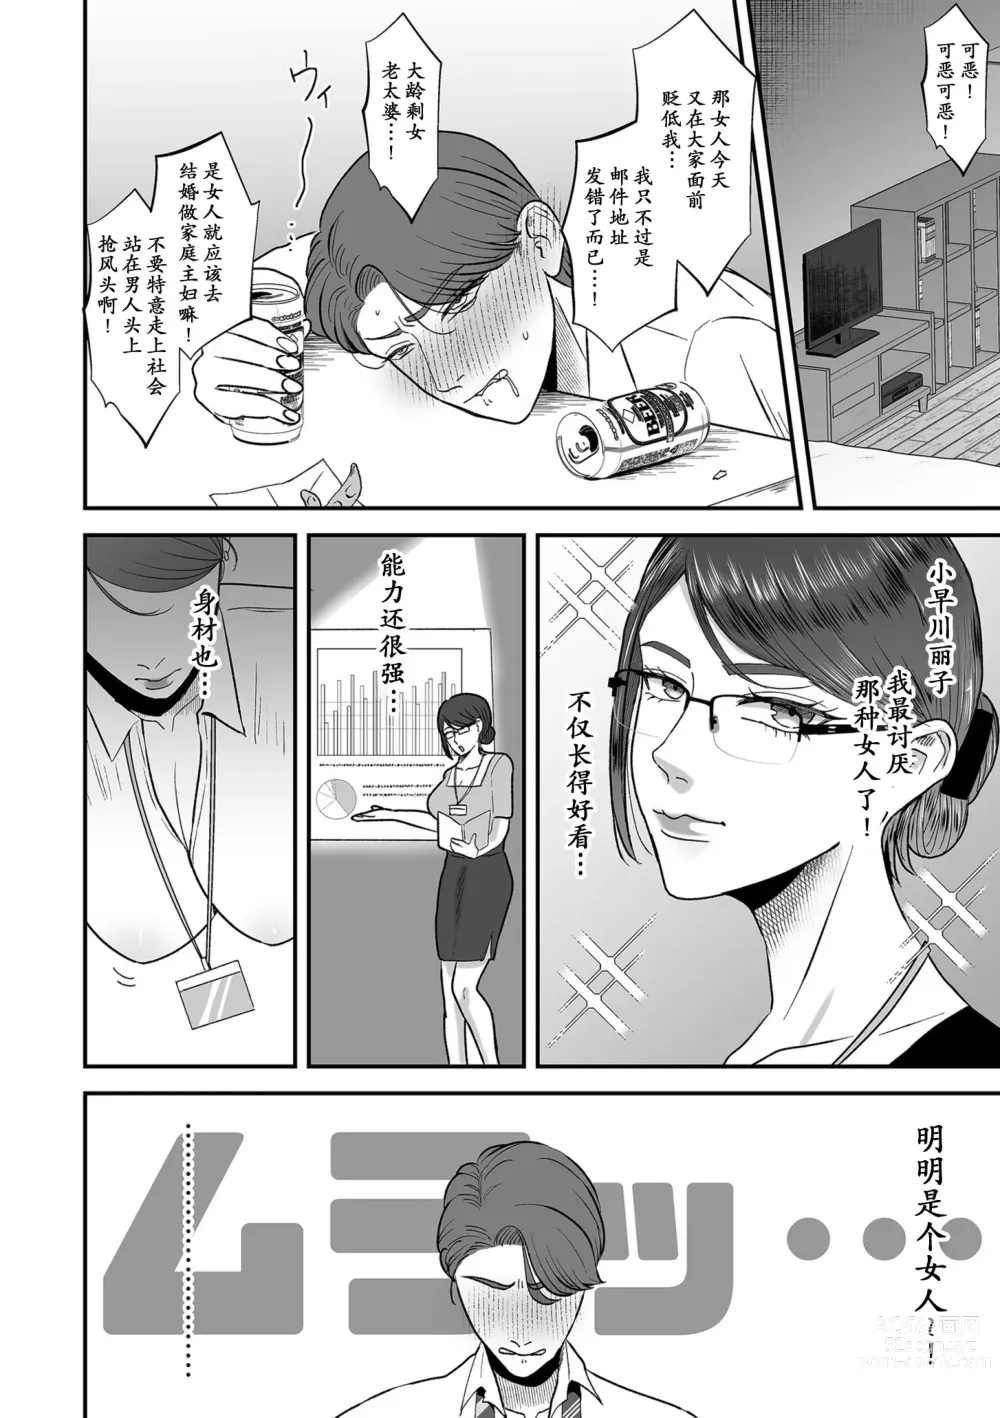 Page 3 of manga 啊啊，可爱的无能受虐狂